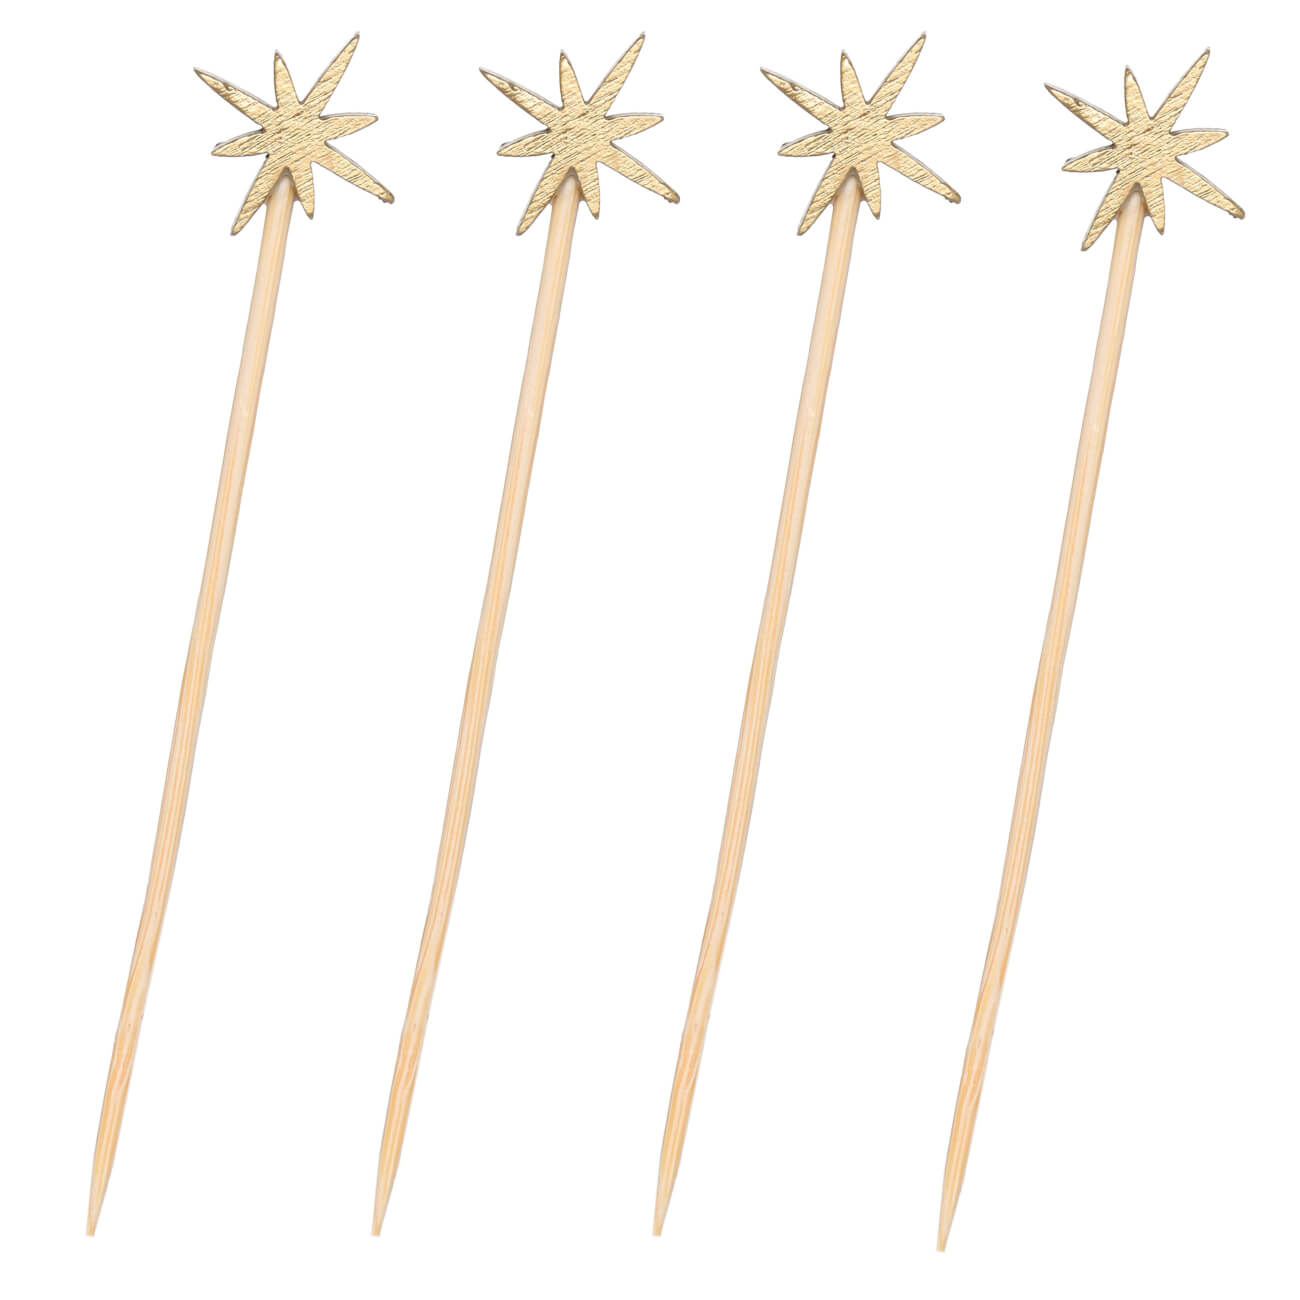 Шпажка для канапе, 9 см, 20 шт, бамбук, золотистая, Звезда, Elegant details бамбуковые пики для канапе bikson